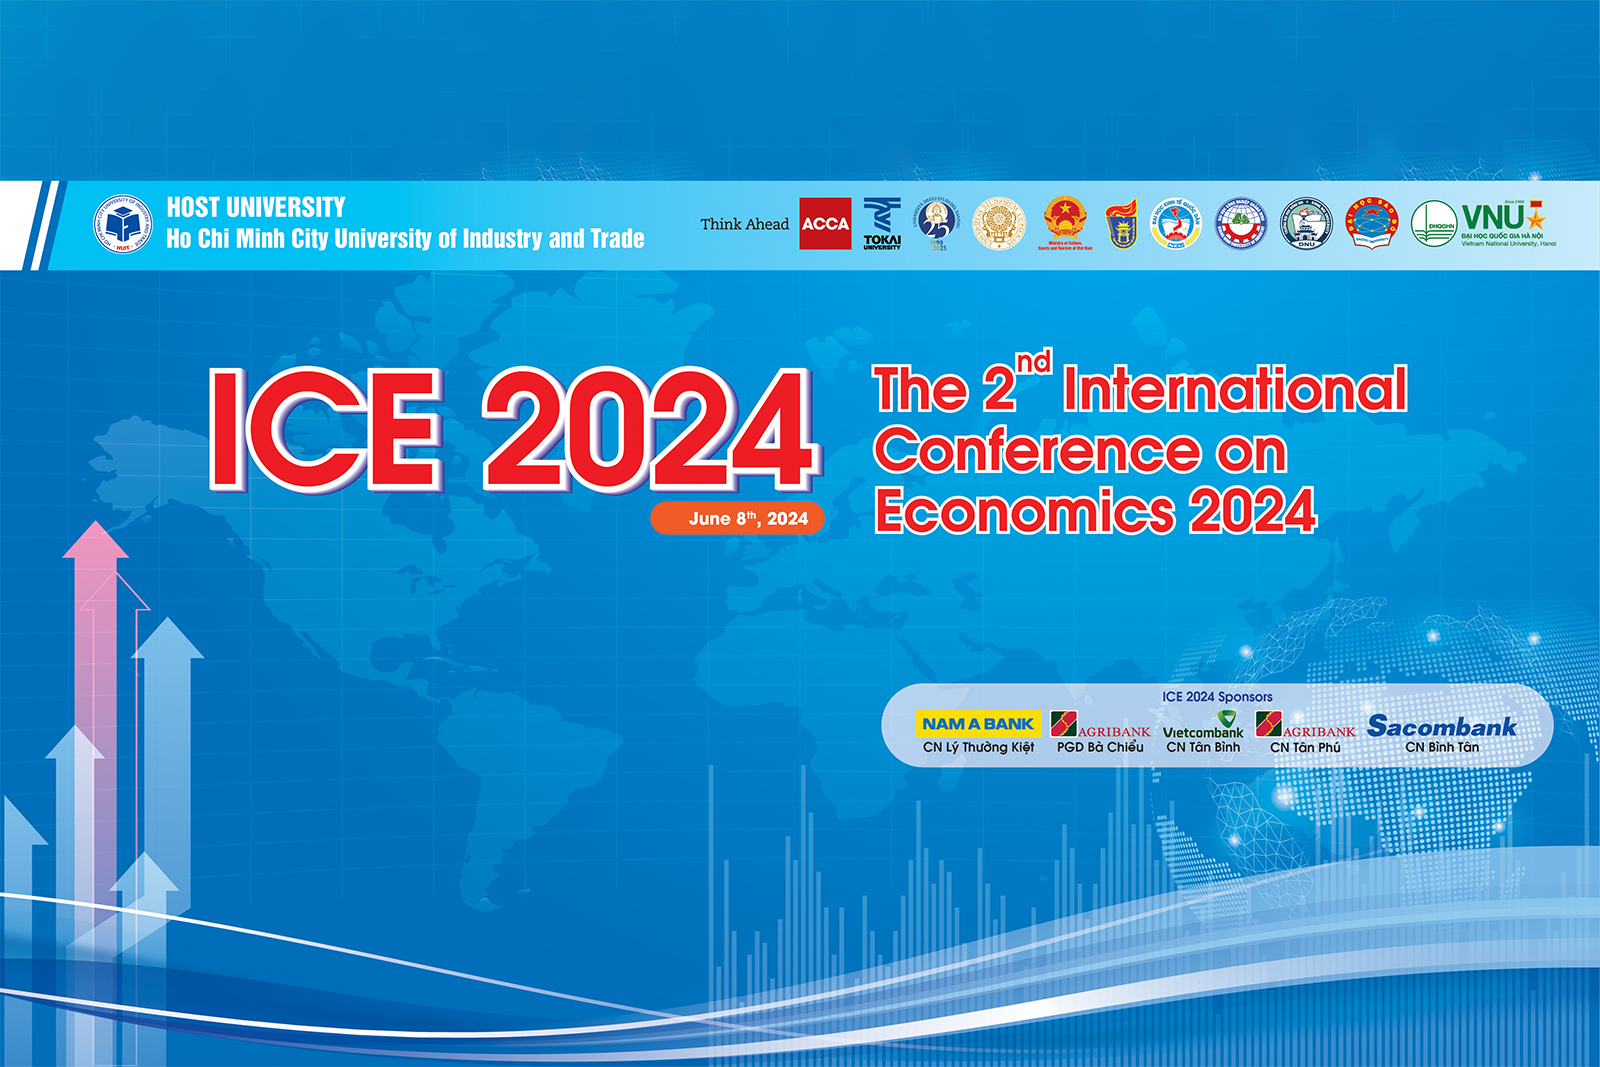 Hội thảo Quốc tế về Kinh tế lần 2 (2nd International Conference on Economics) - ICE 2024